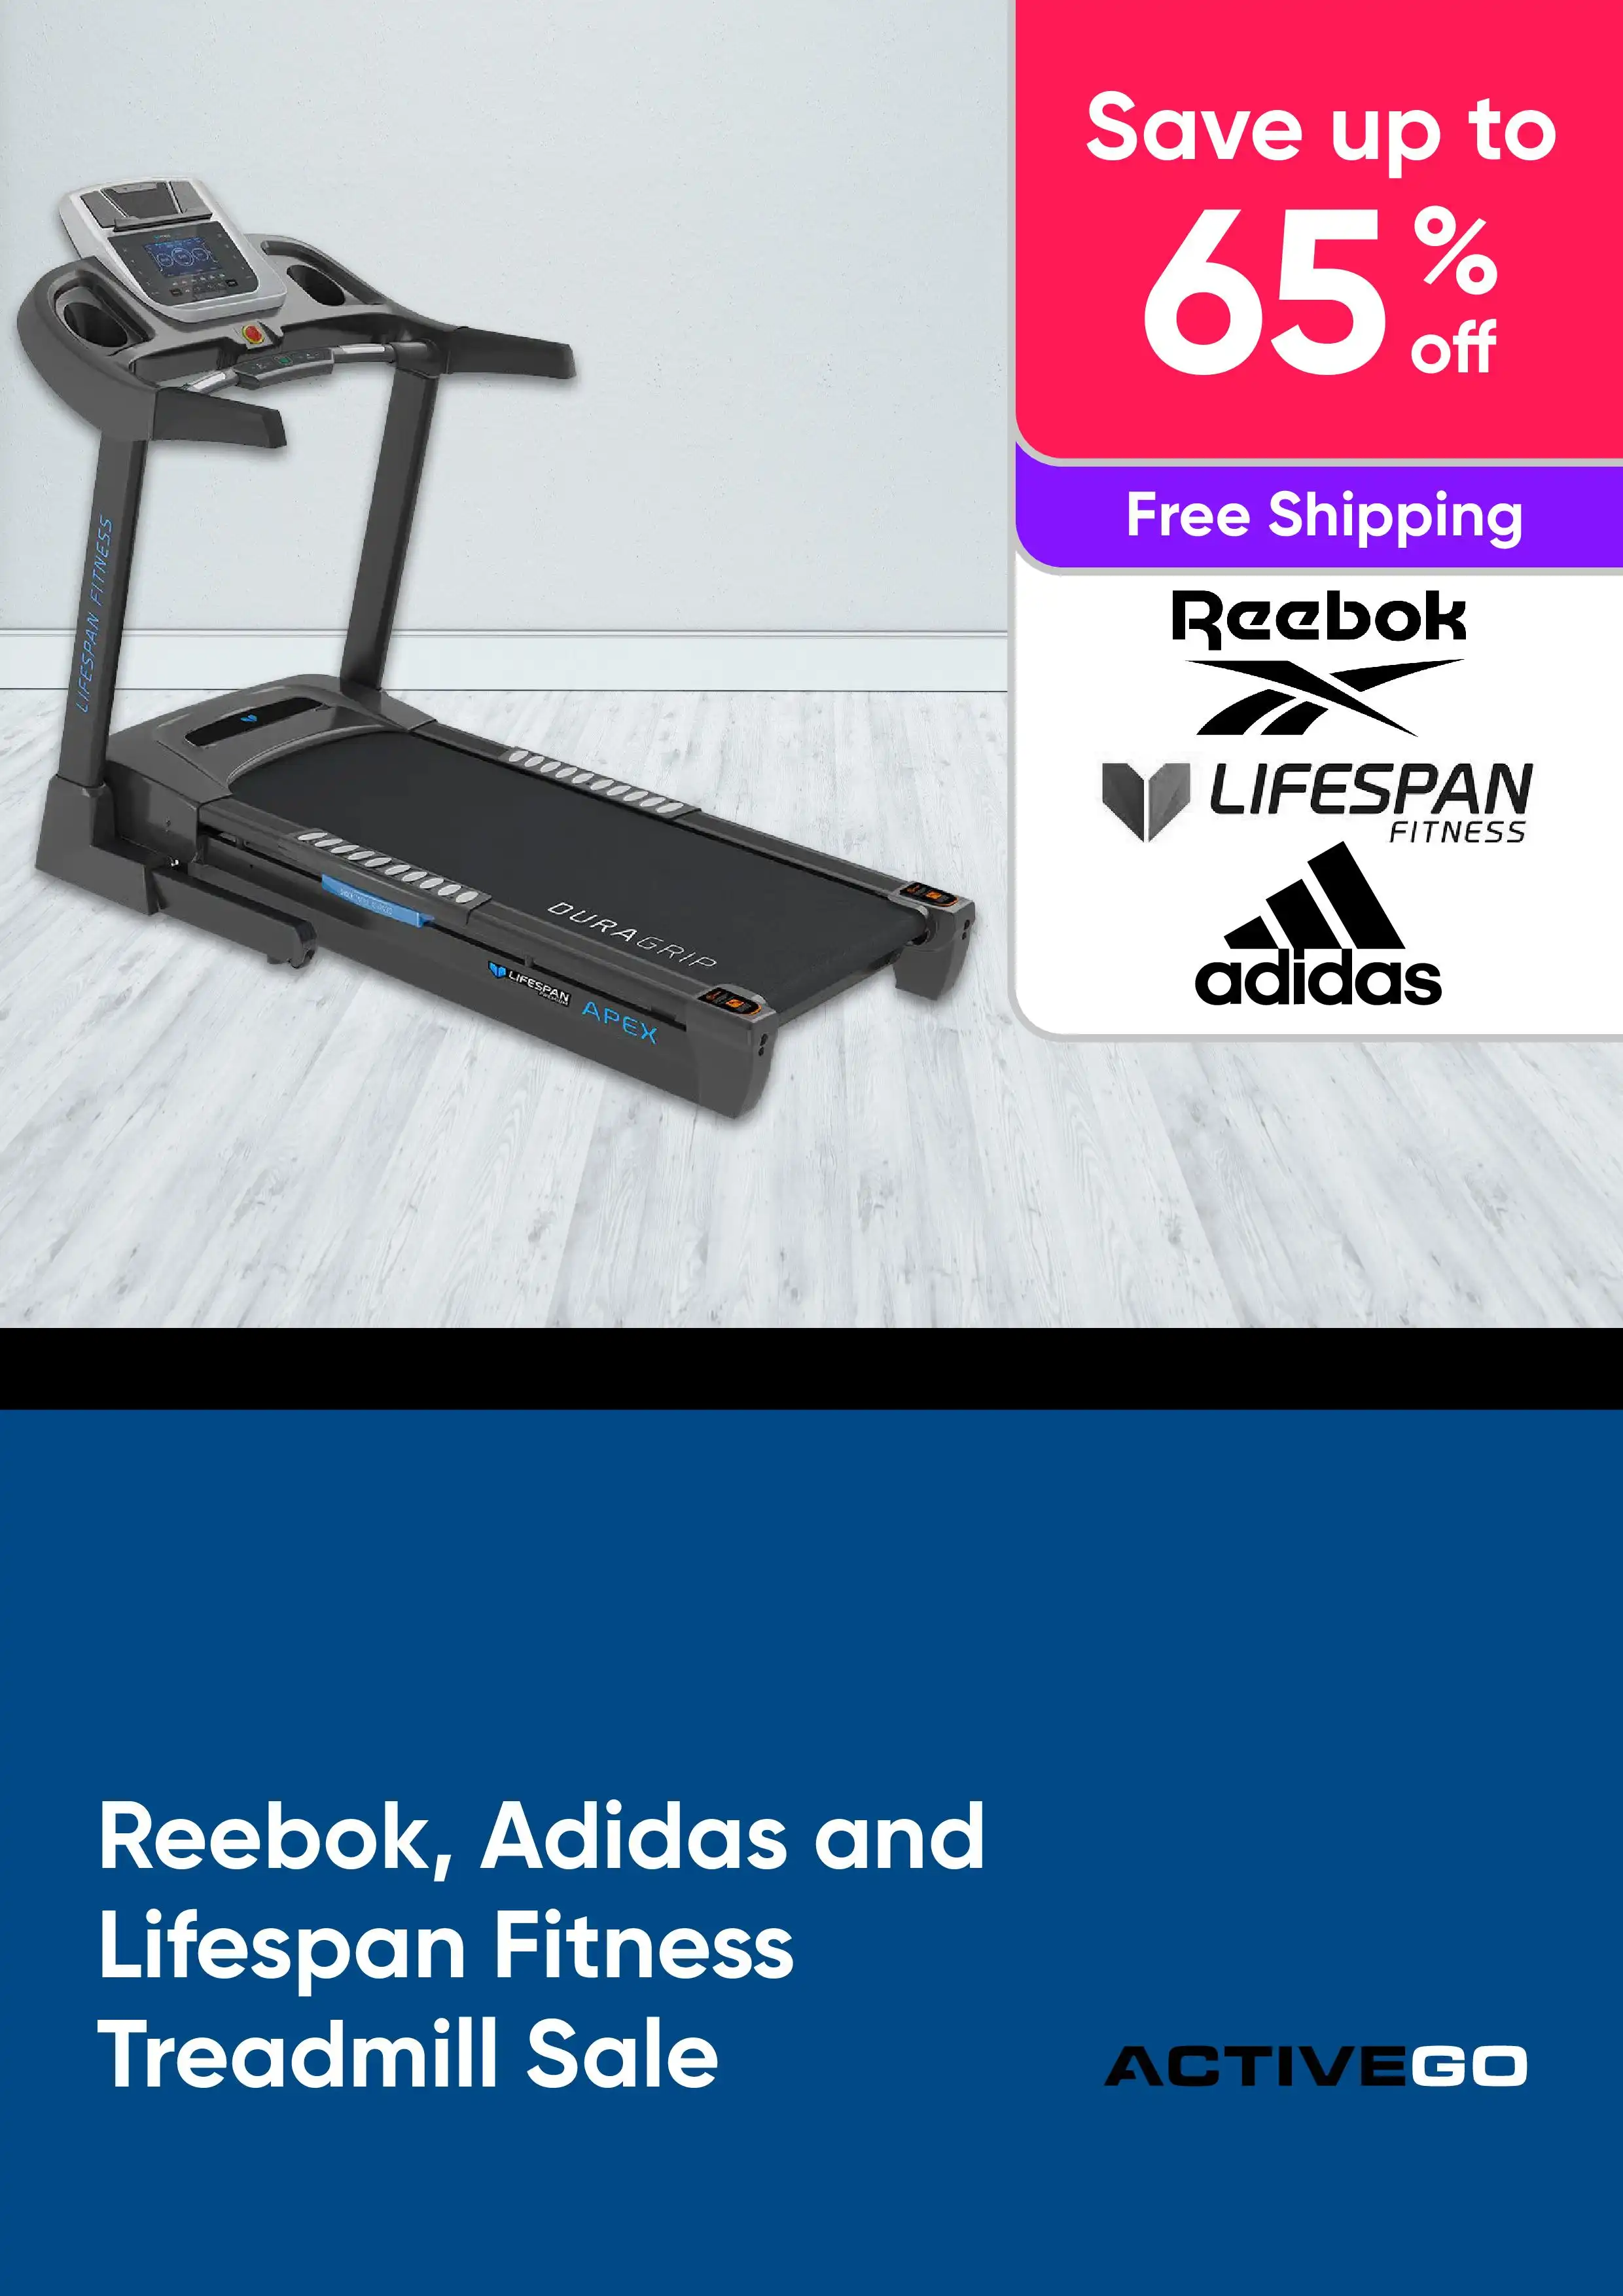 Reebok, Adidas and Lifespan Fitness Treadmill Sale - Save up to 65% off